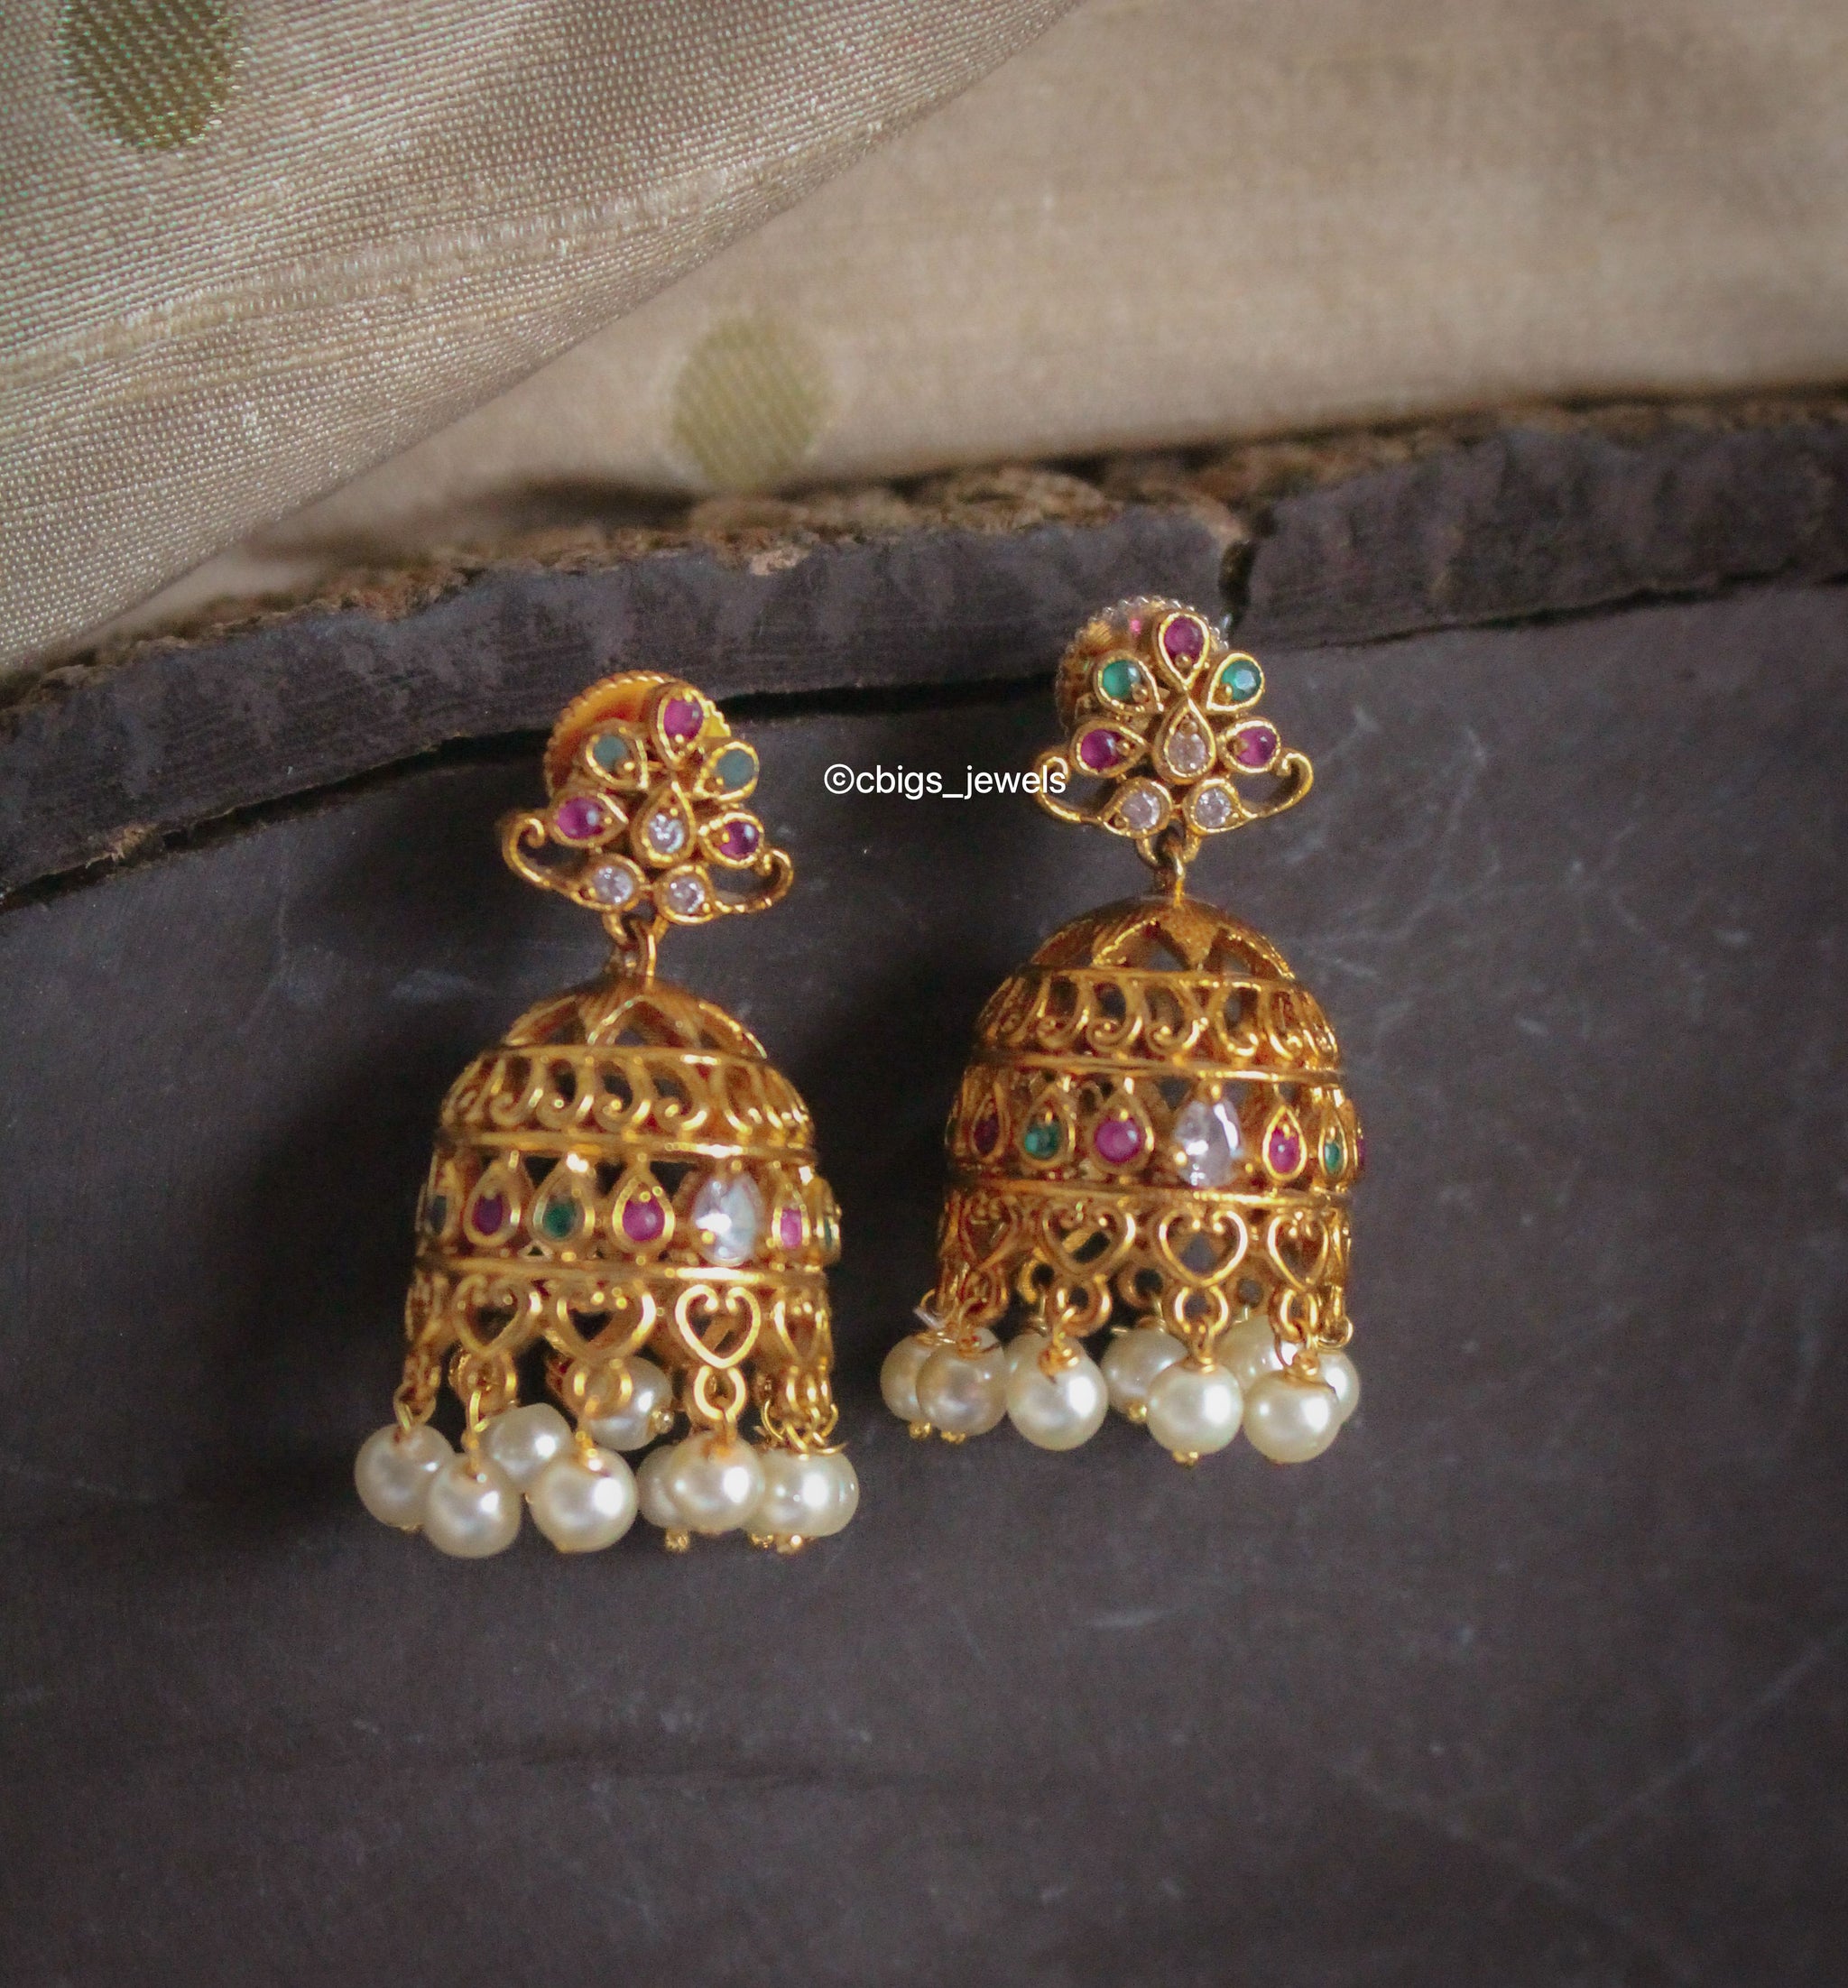 Diamond Earrings for sale in Coimbatore Tamil Nadu  Facebook Marketplace   Facebook